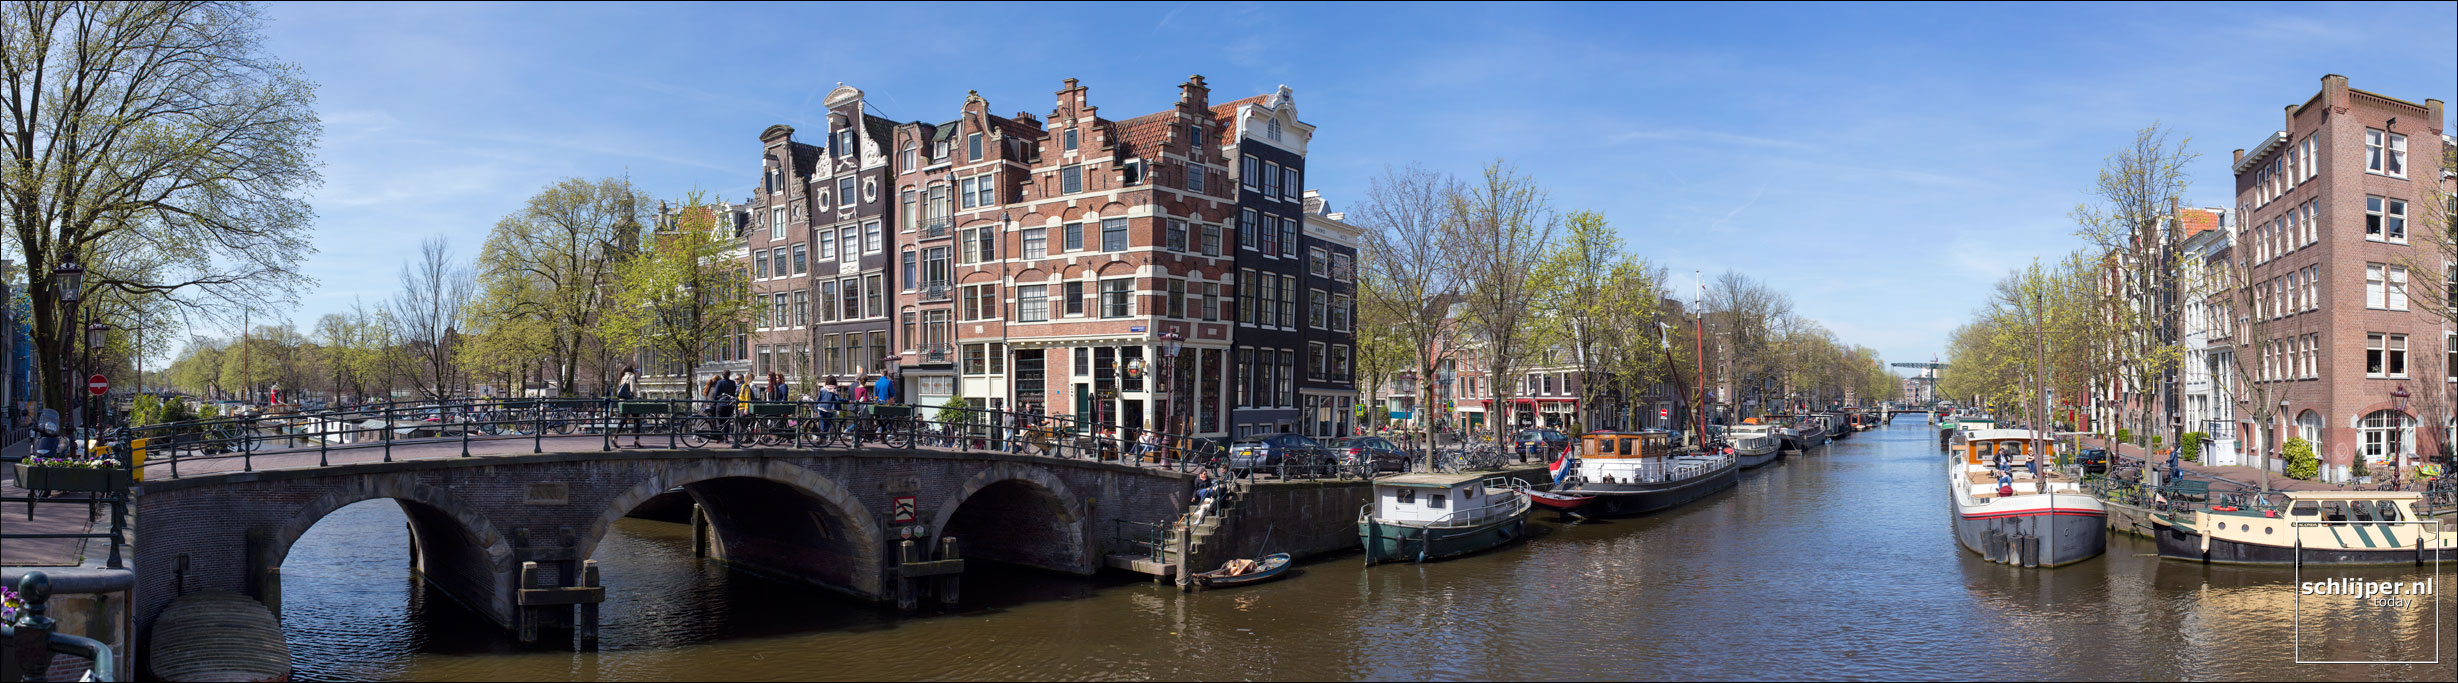 Nederland, Amsterdam, 14 april 2015